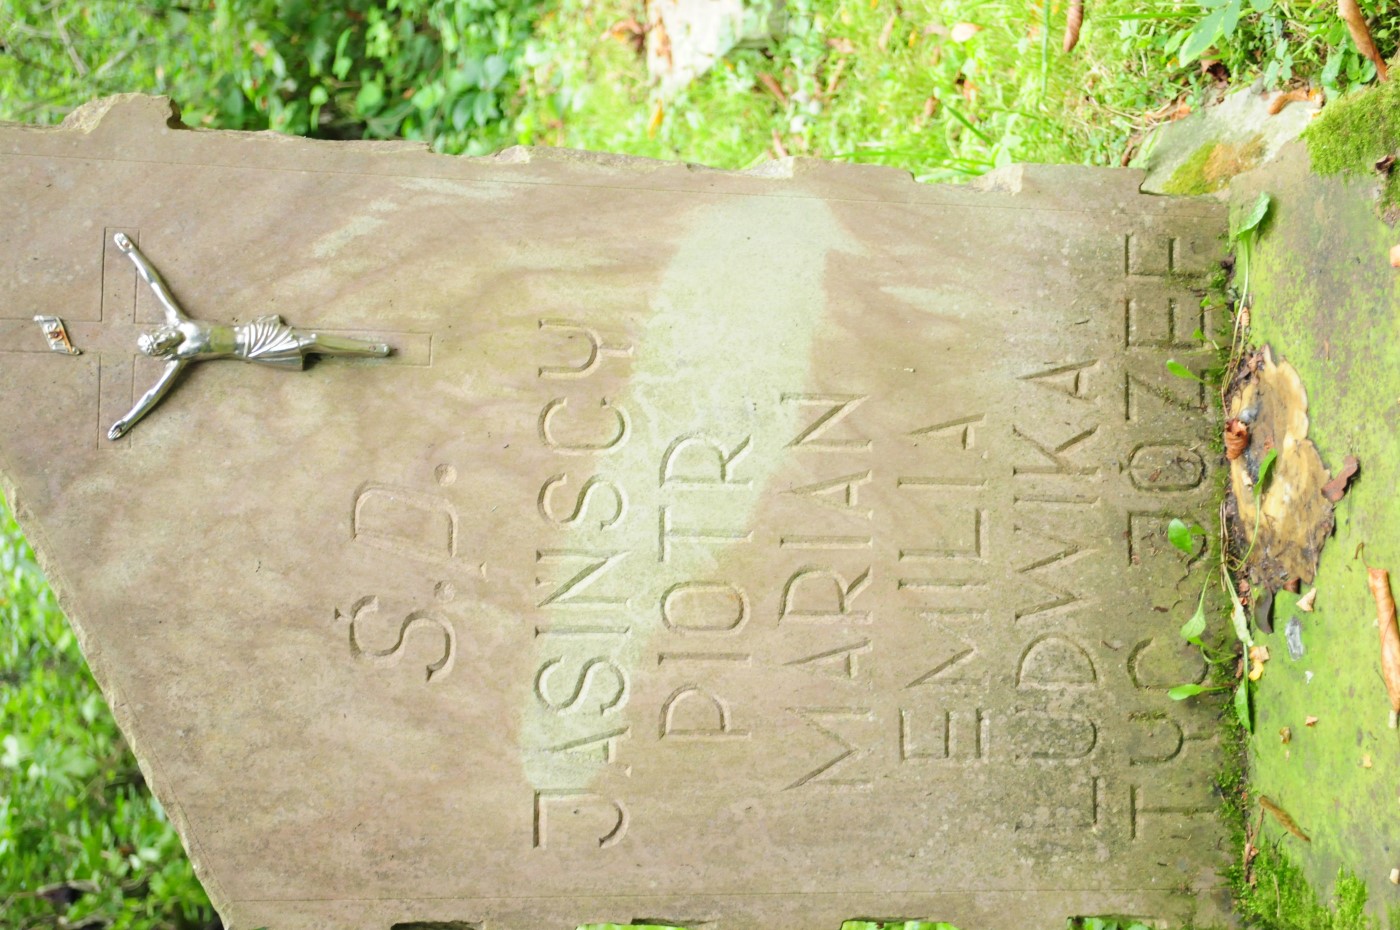 Tombstone of the Jasiński family and Jozef Tyc, cemetery in Puzniki